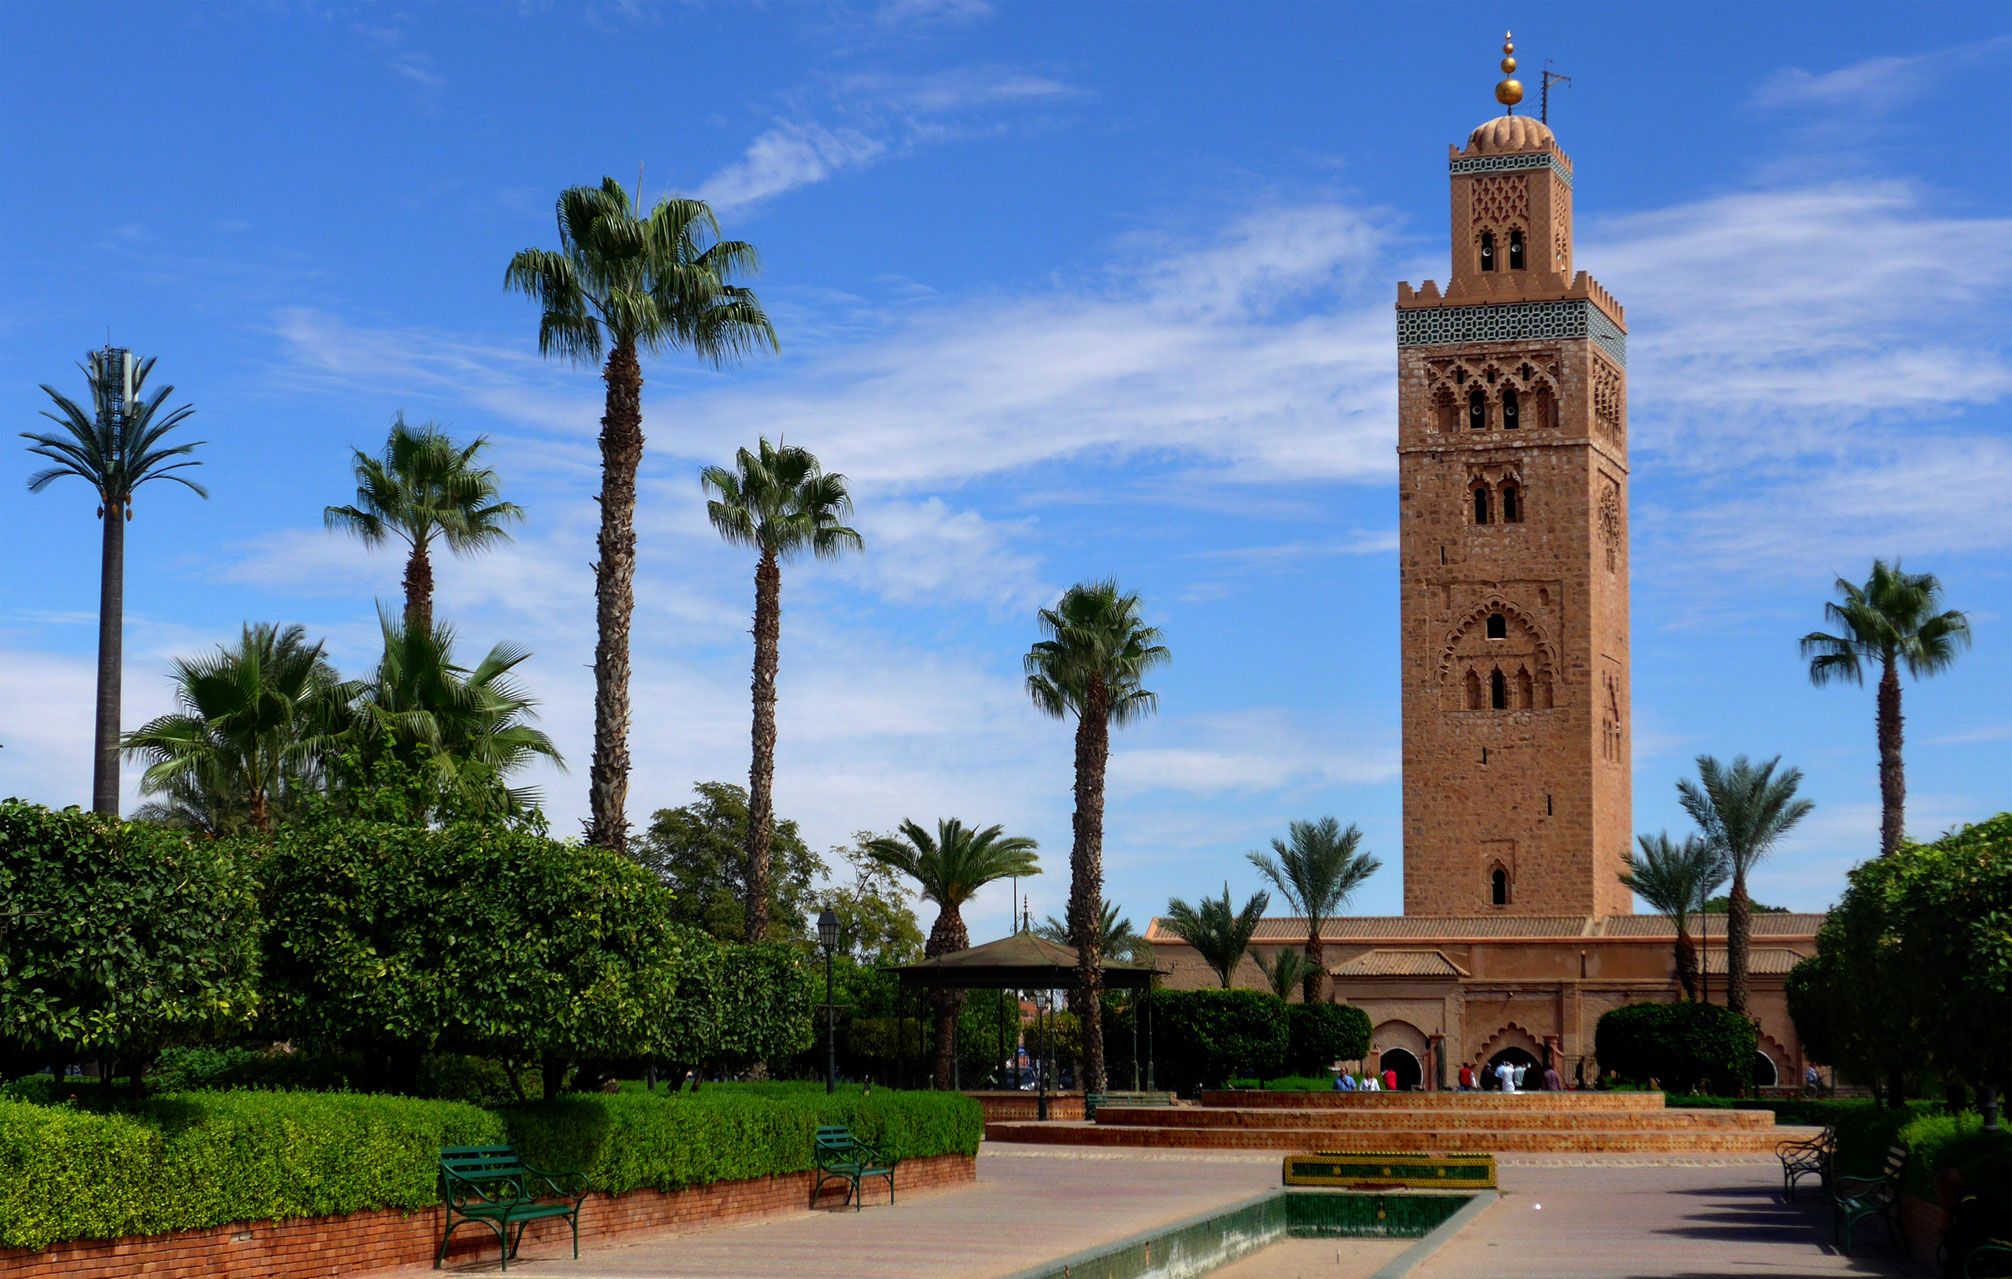 marrakech koutoubia mosque front views - Google Search | Marrakech ...